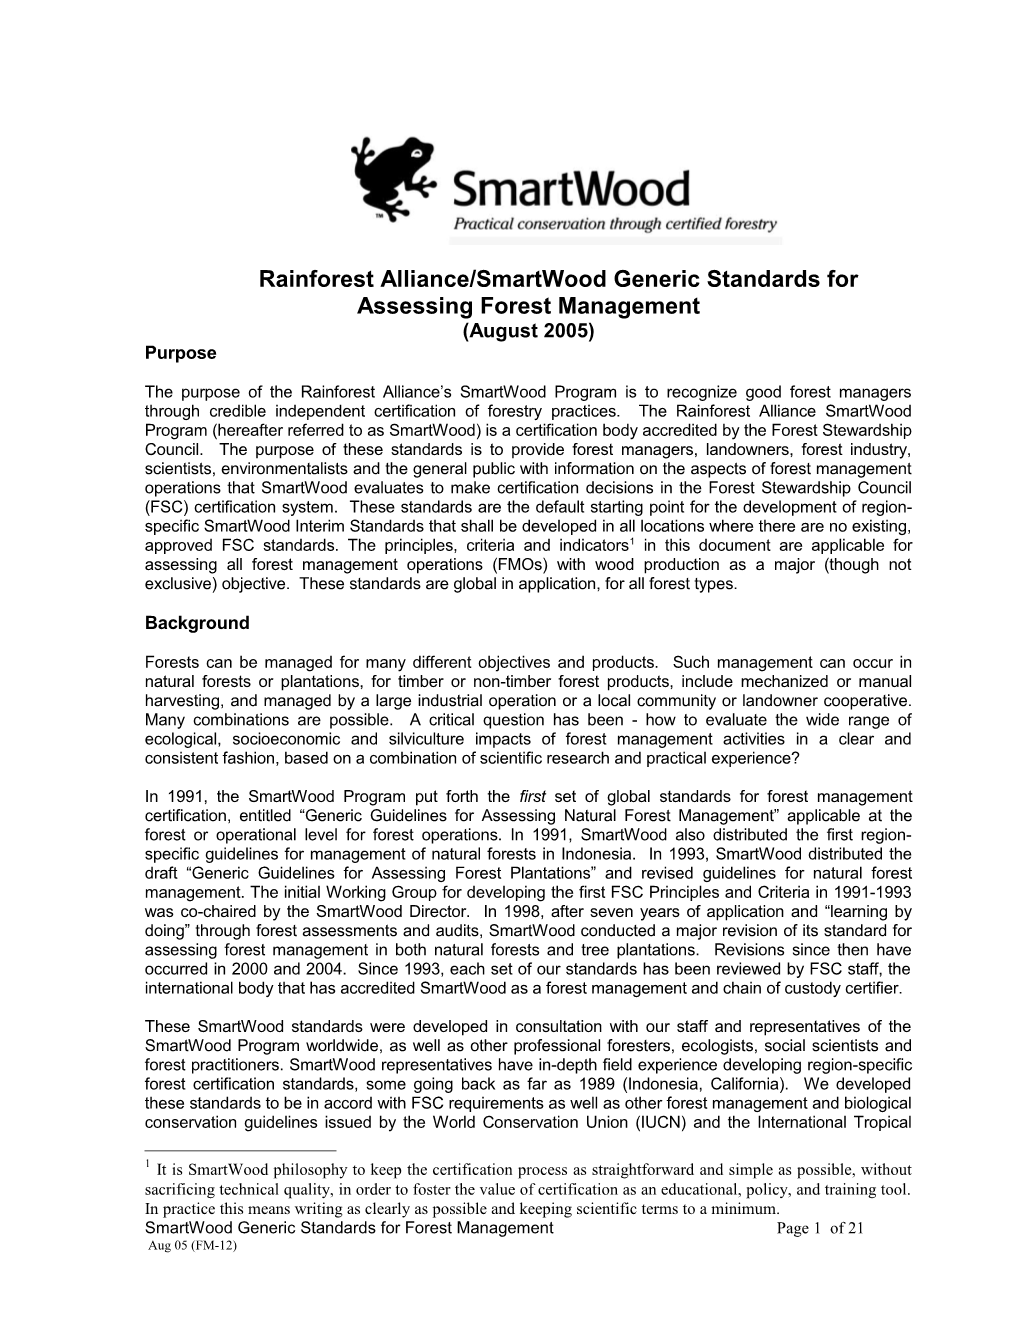 Rainforest Alliance/Smartwood Generic Standards for Assessing Forest Management